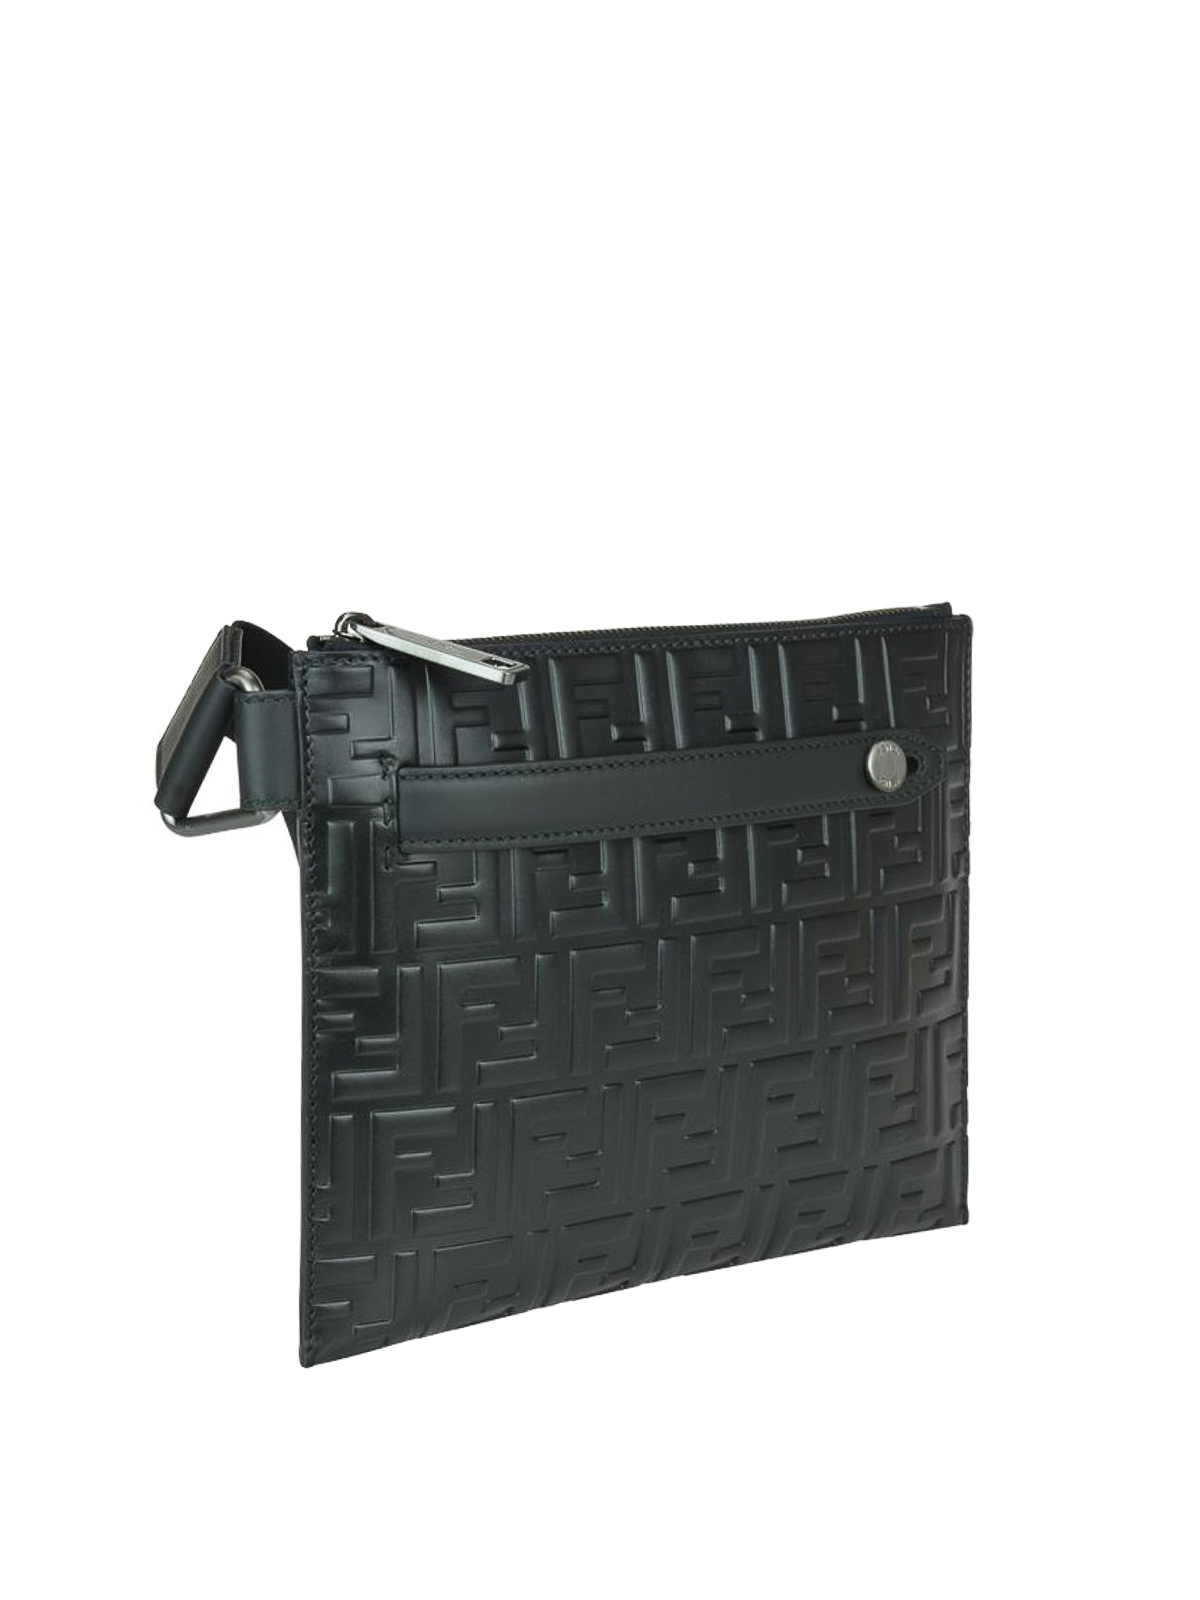 logo-embossed leather crossbody bag, FENDI